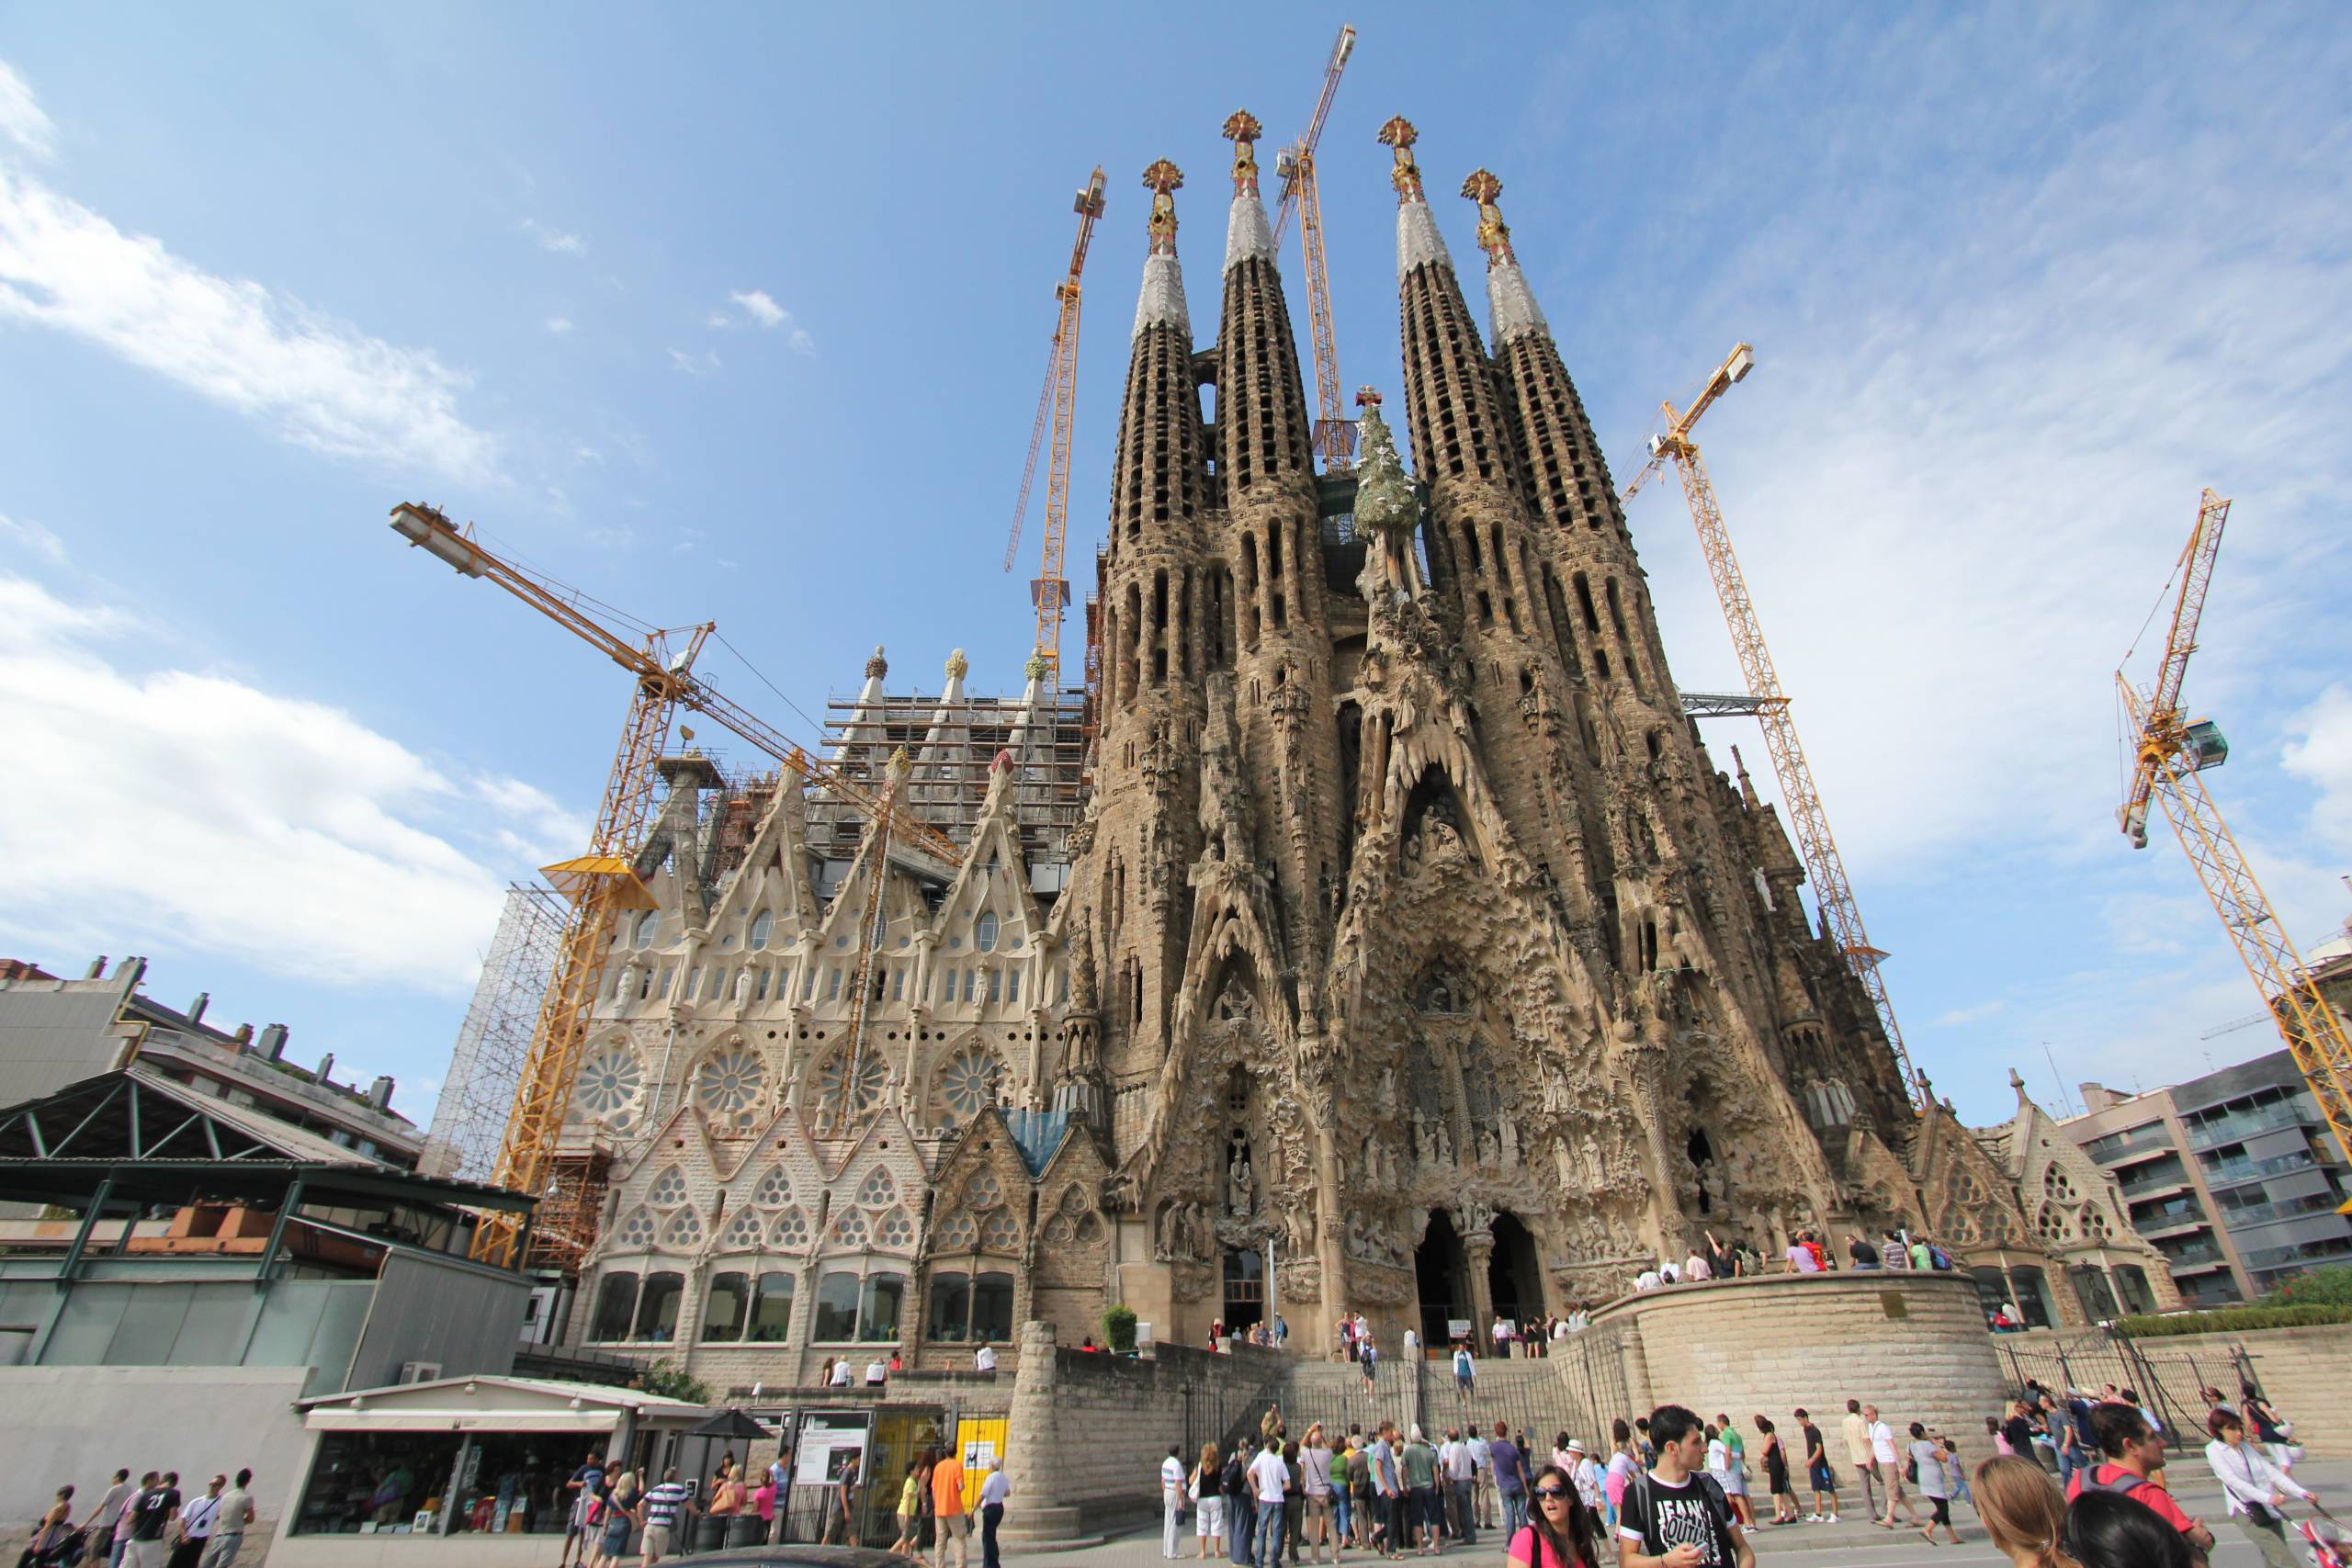 The Sagrada Familia: A Masterpiece in Progress